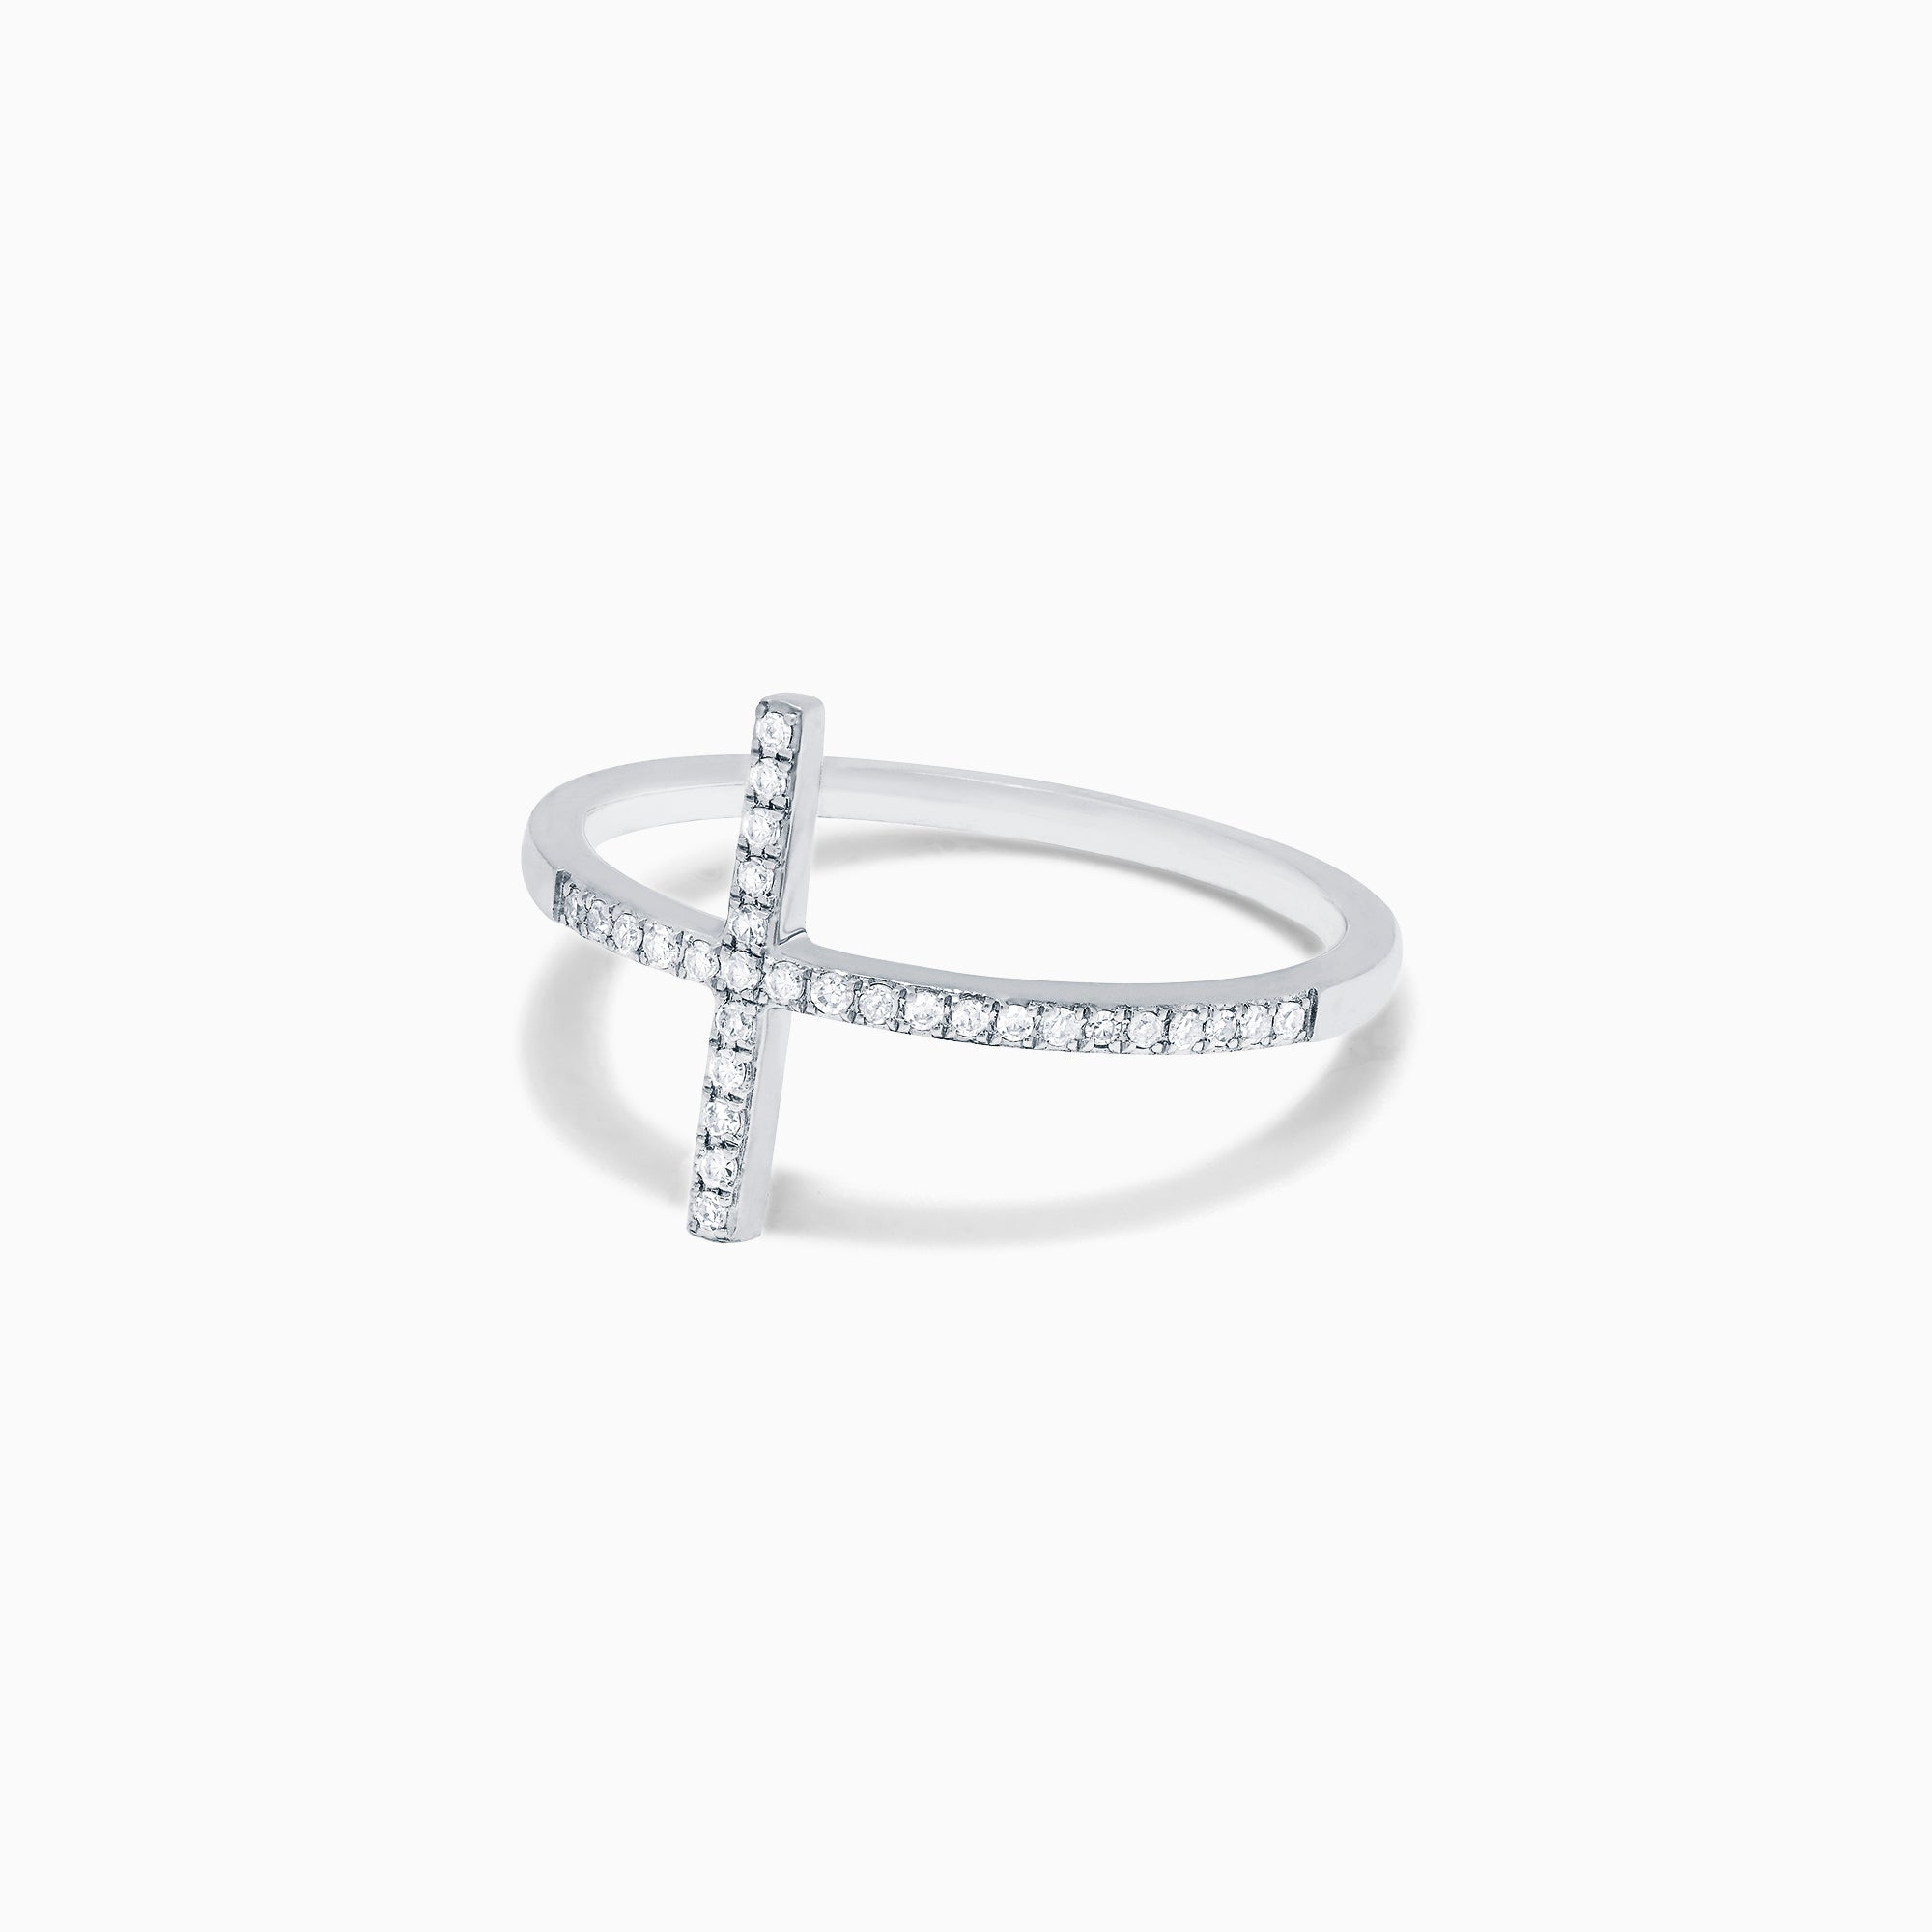 Effy Novelty 14K White Gold Diamond Cross Ring, 0.10 TCW